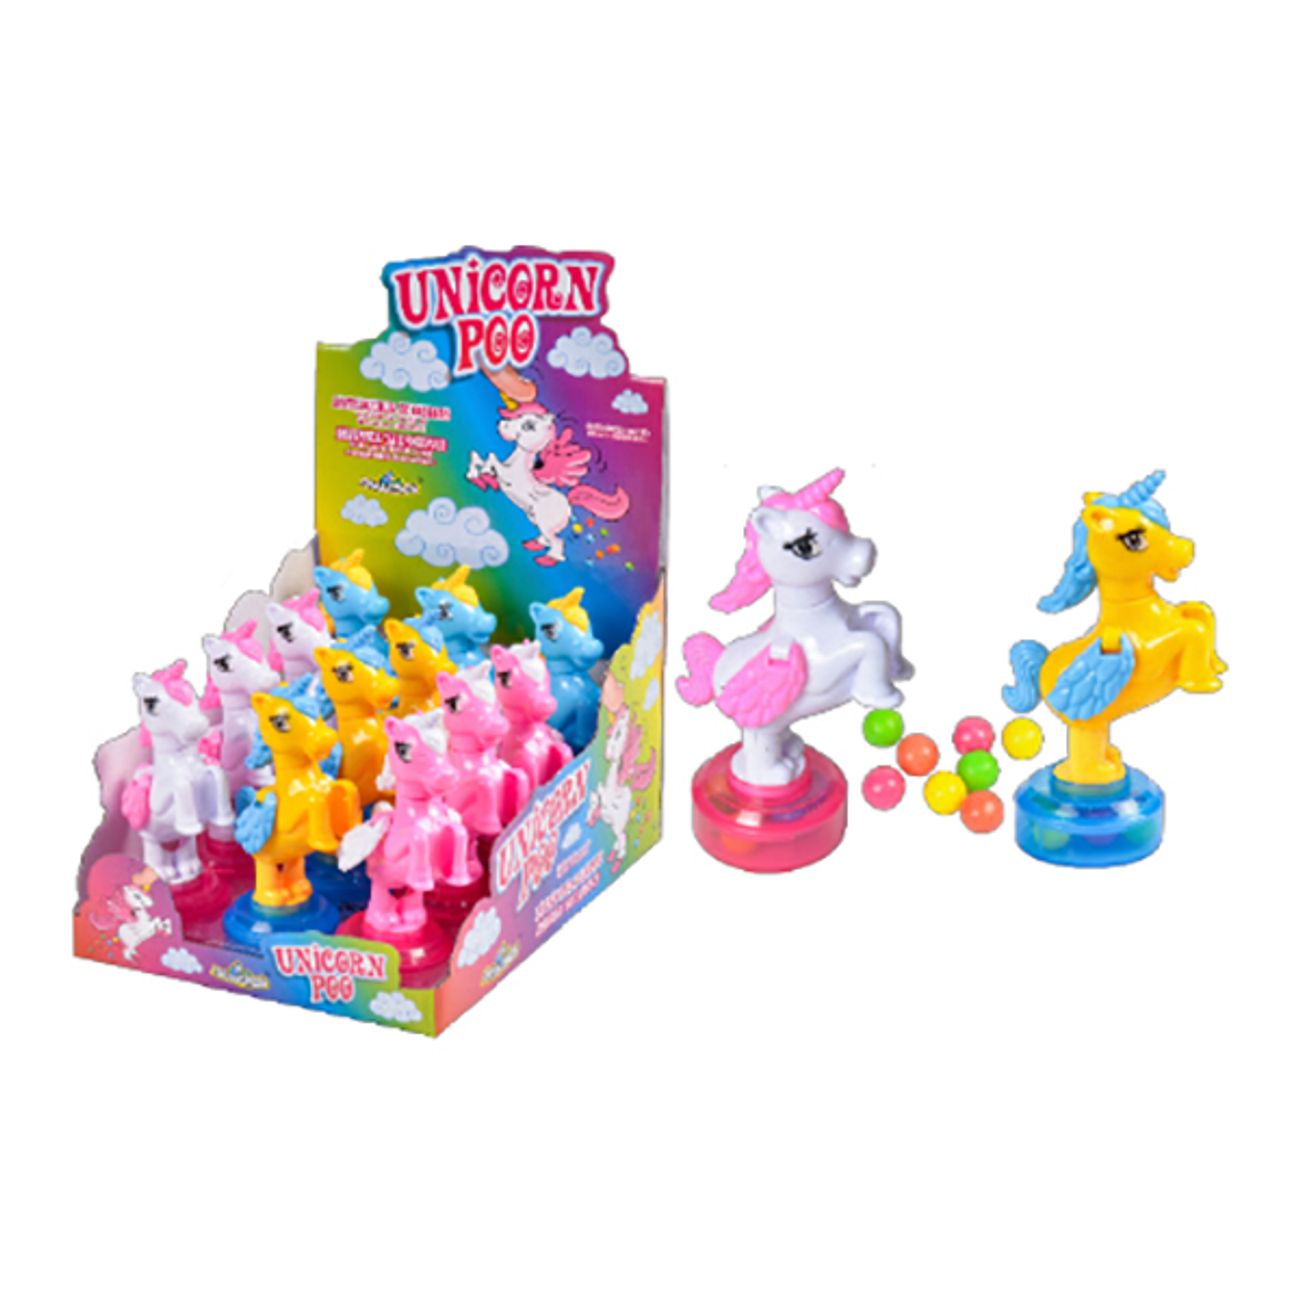 unicorn-poo-godis-75604-1